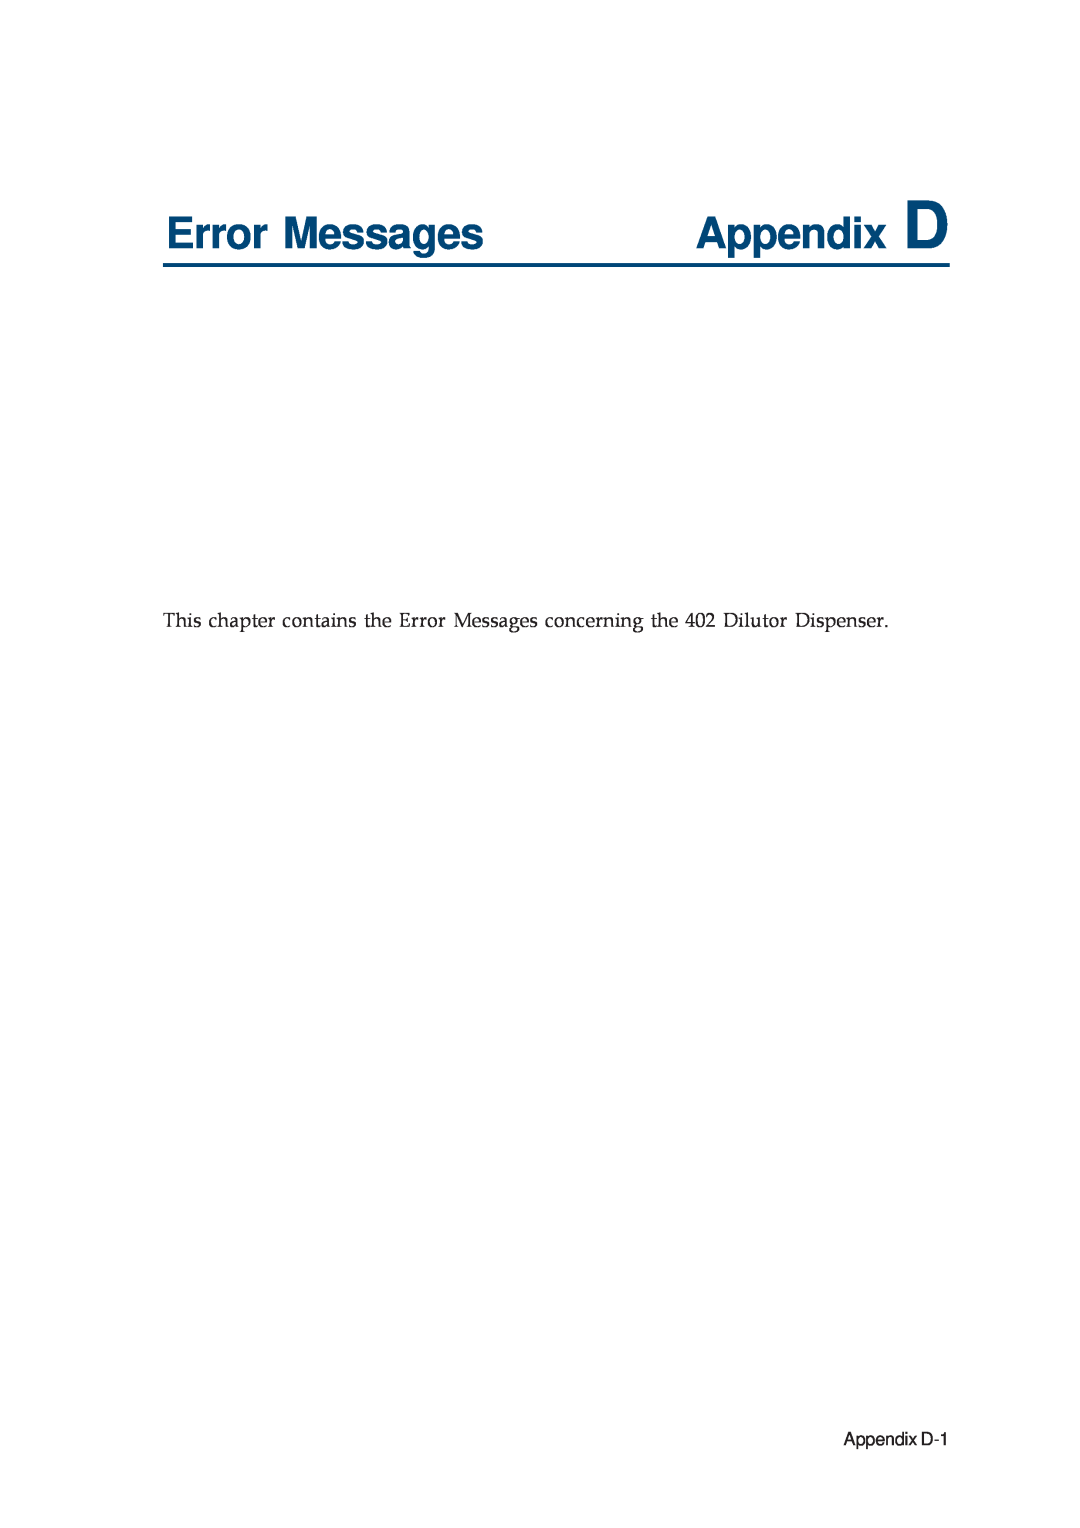 Gilson 402 manual Error Messages, Appendix D 